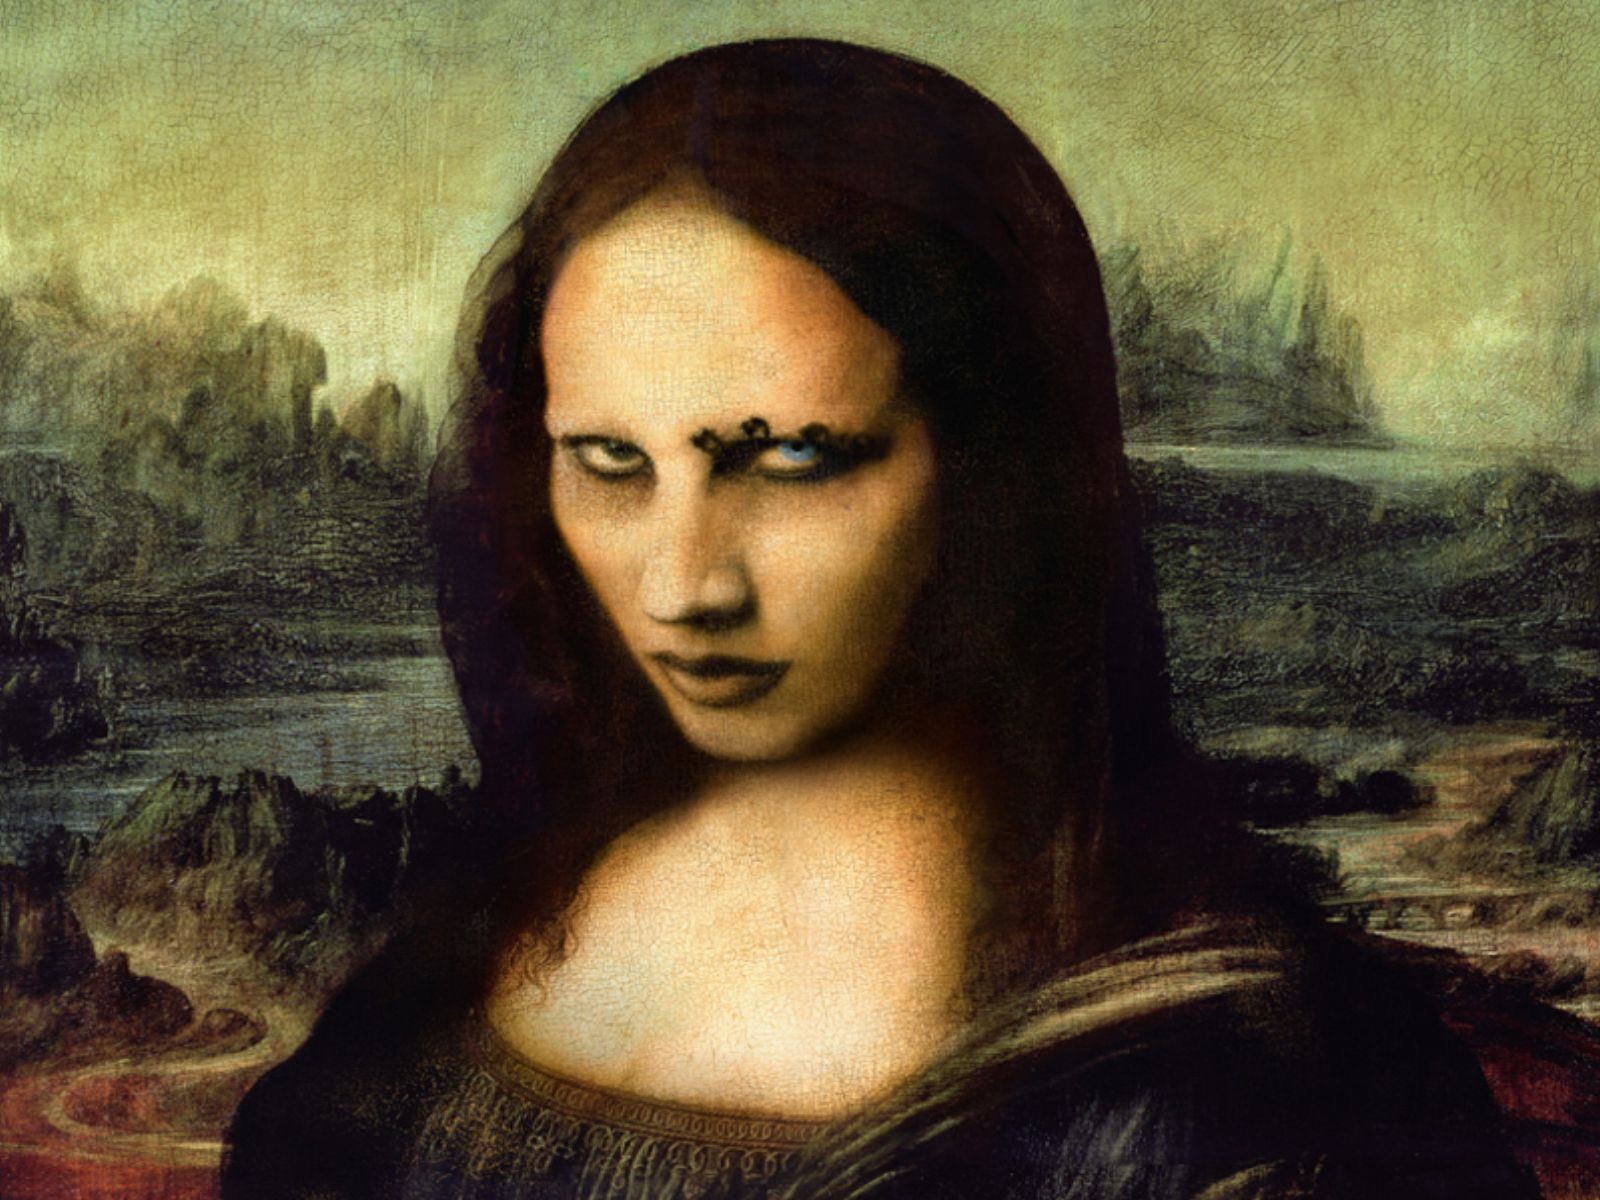 Marilyn Manson Industrial Metal Rock Heavy Shock Gothic Glam Mona Lisa